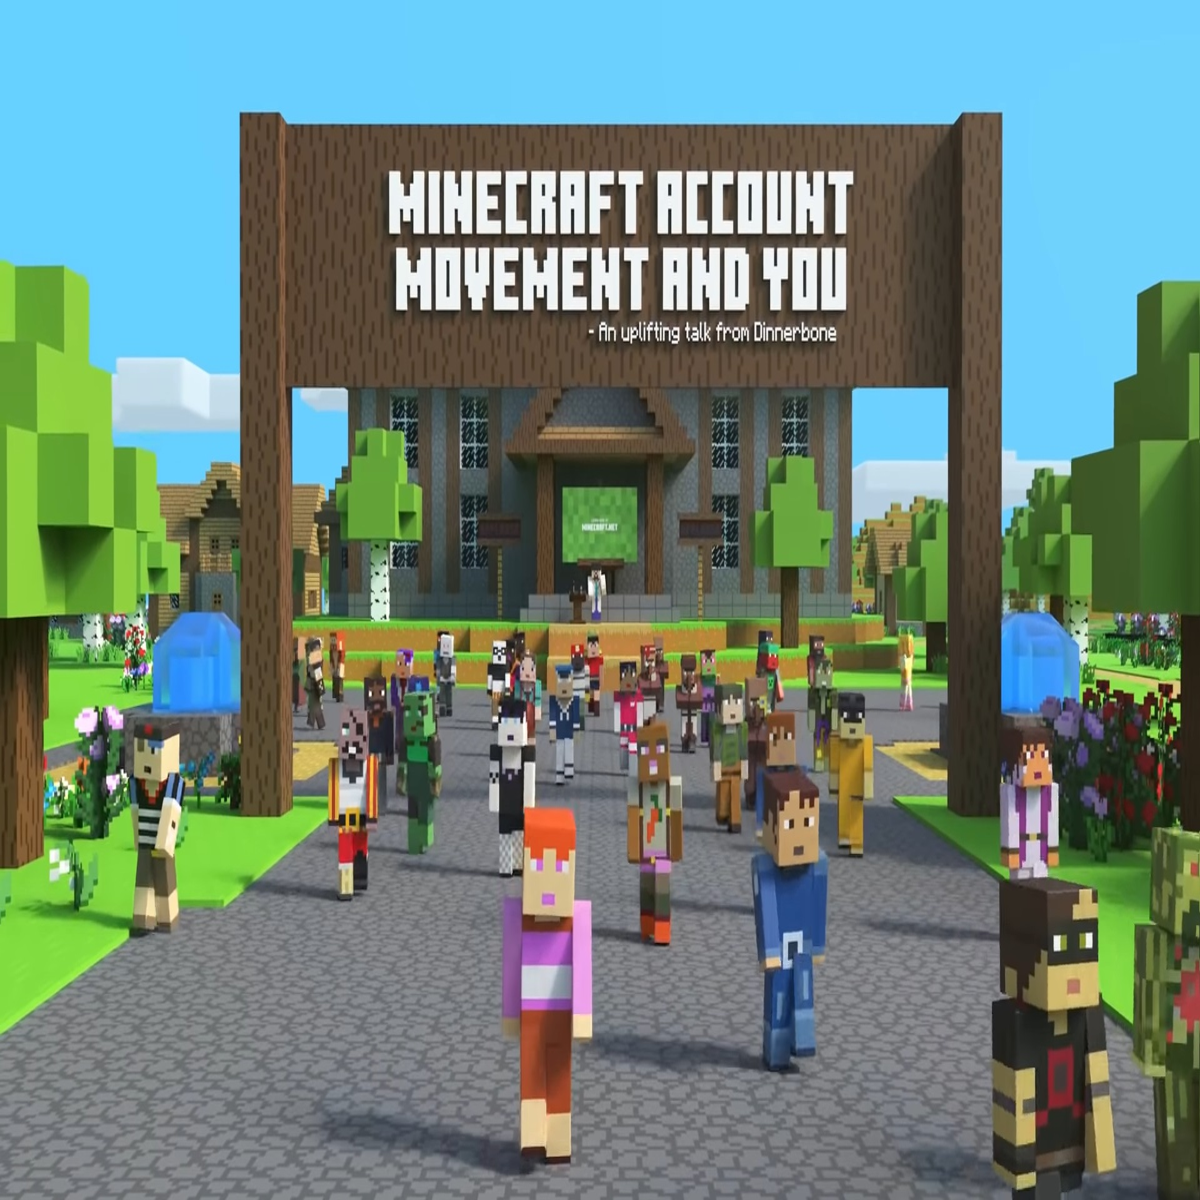 Mojang Studios begins its mandatory Microsoft Account requirement for  Minecraft: Java Edition